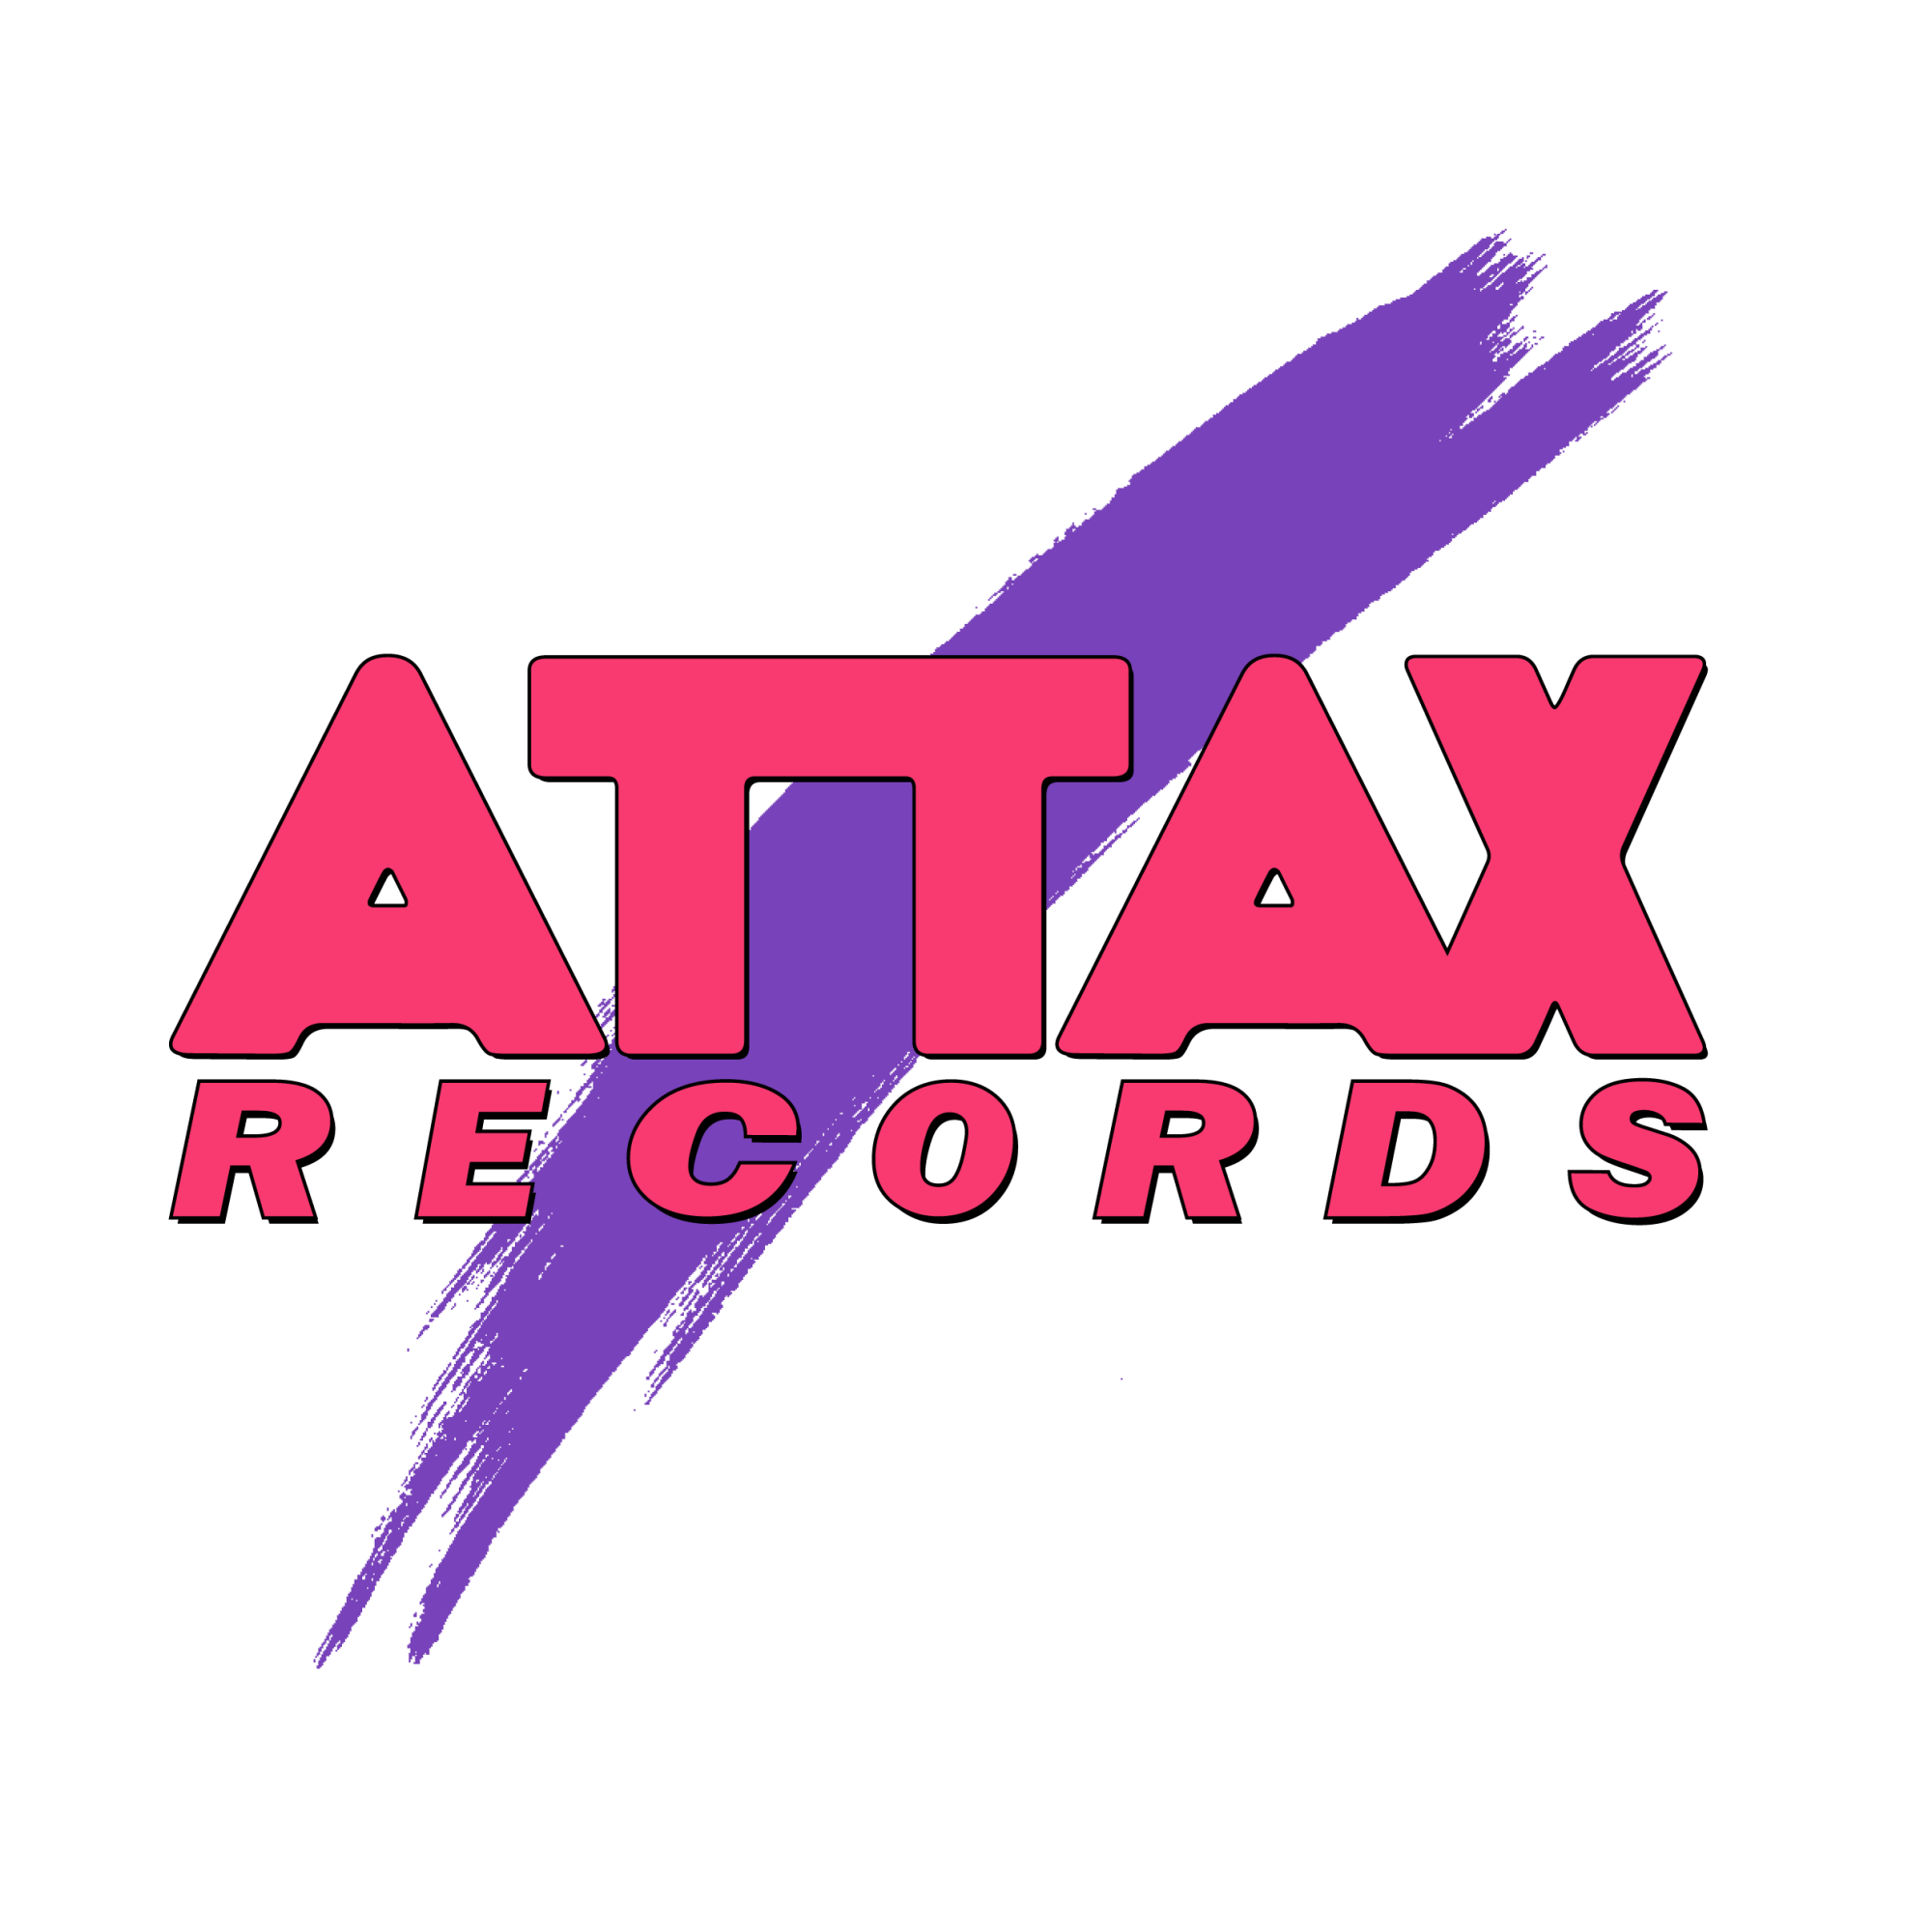 Attax Records